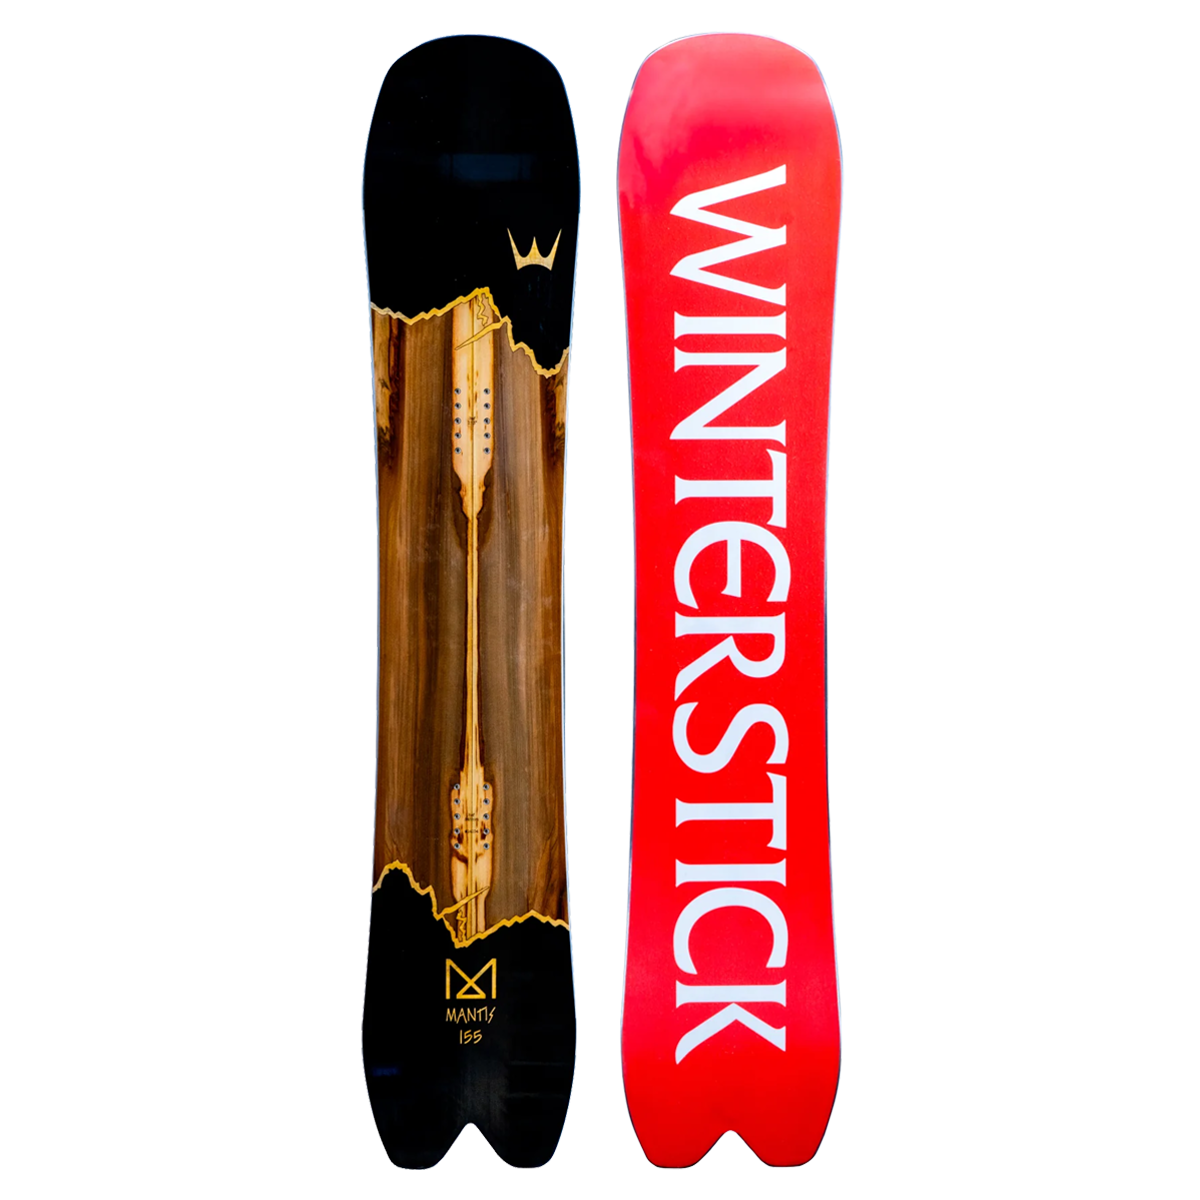 Winterstick Mantis Snowboard - 155